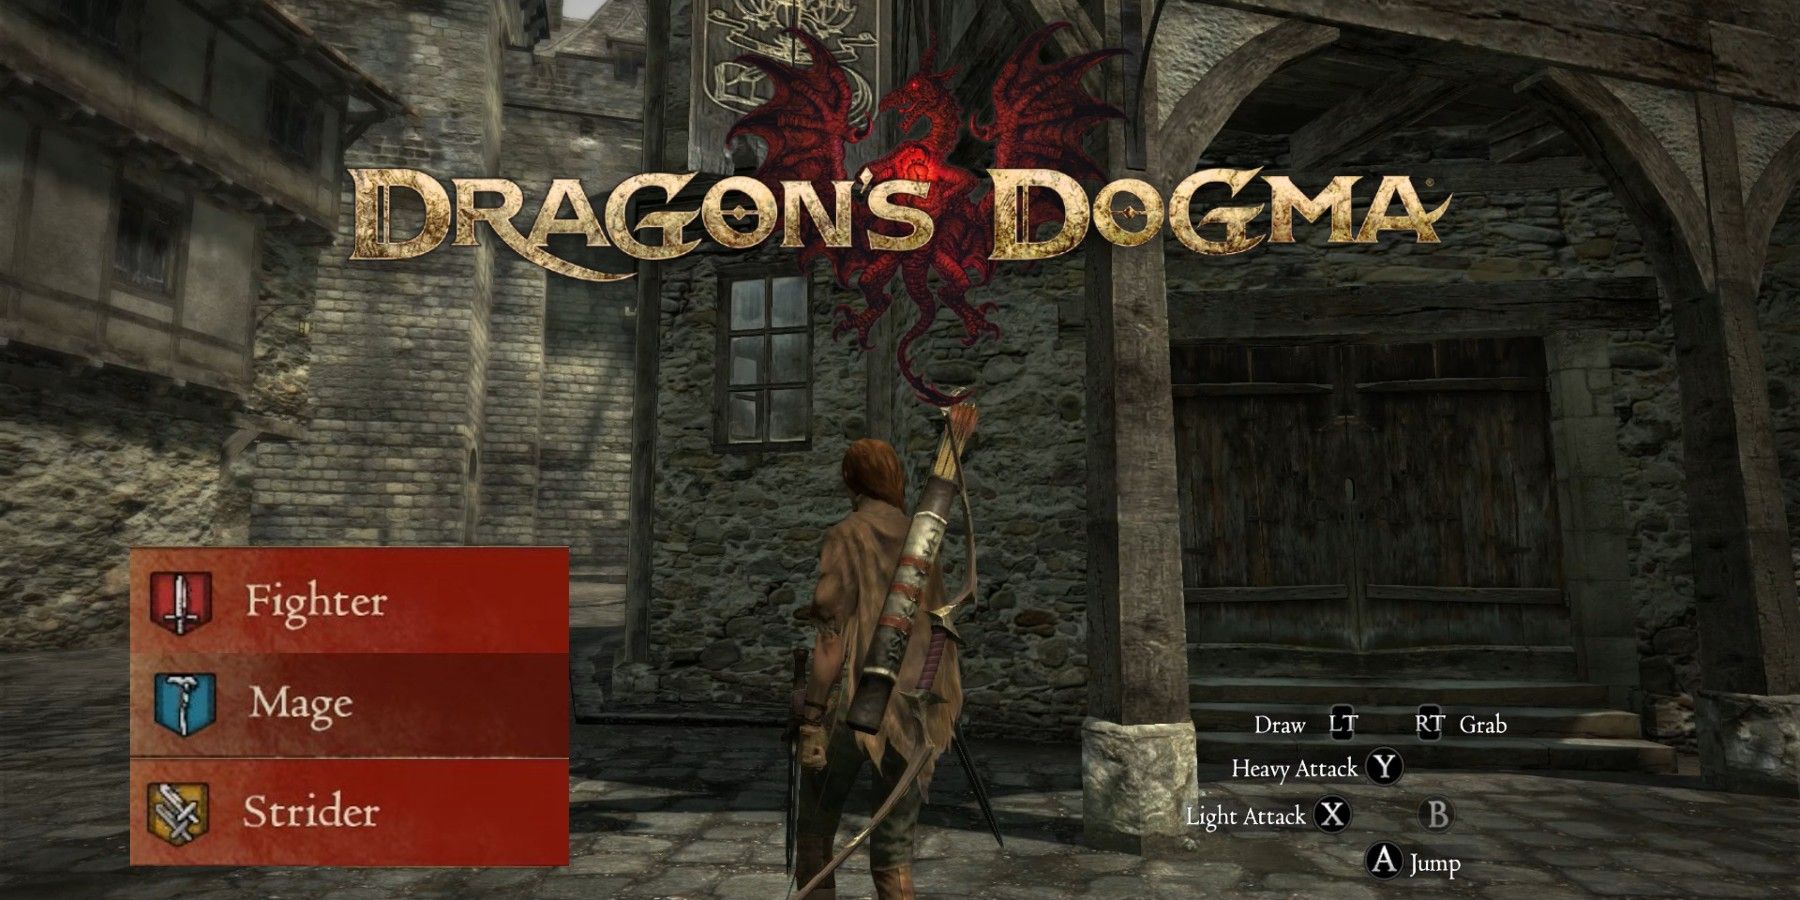 Crafting - Dragon's Dogma Wiki Guide - IGN, PDF